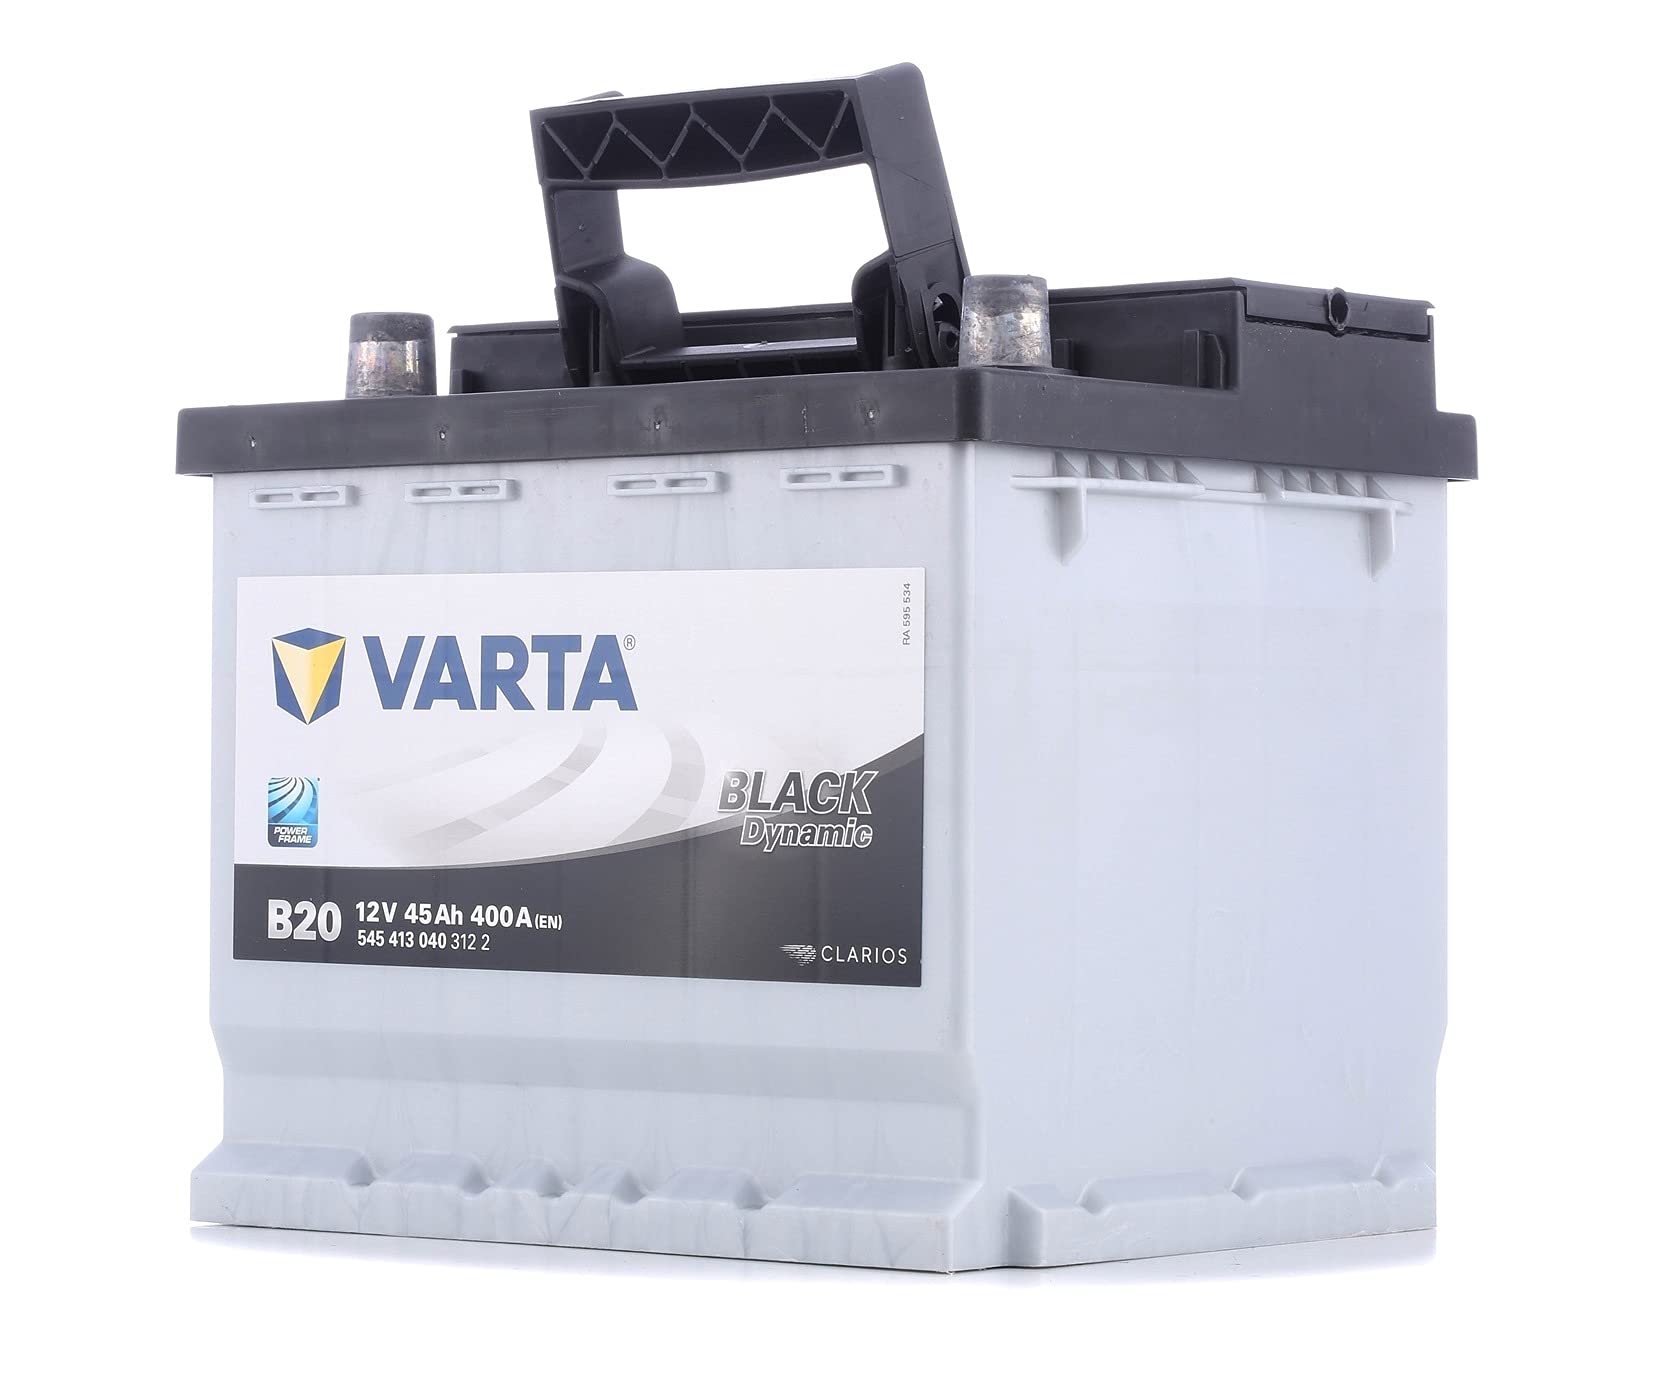 Varta 5454130403122 Autobatterien Black Dynamic B20 12 V 45 mAh 400 A, 18.7 x 13.6 x 11 cm von Varta